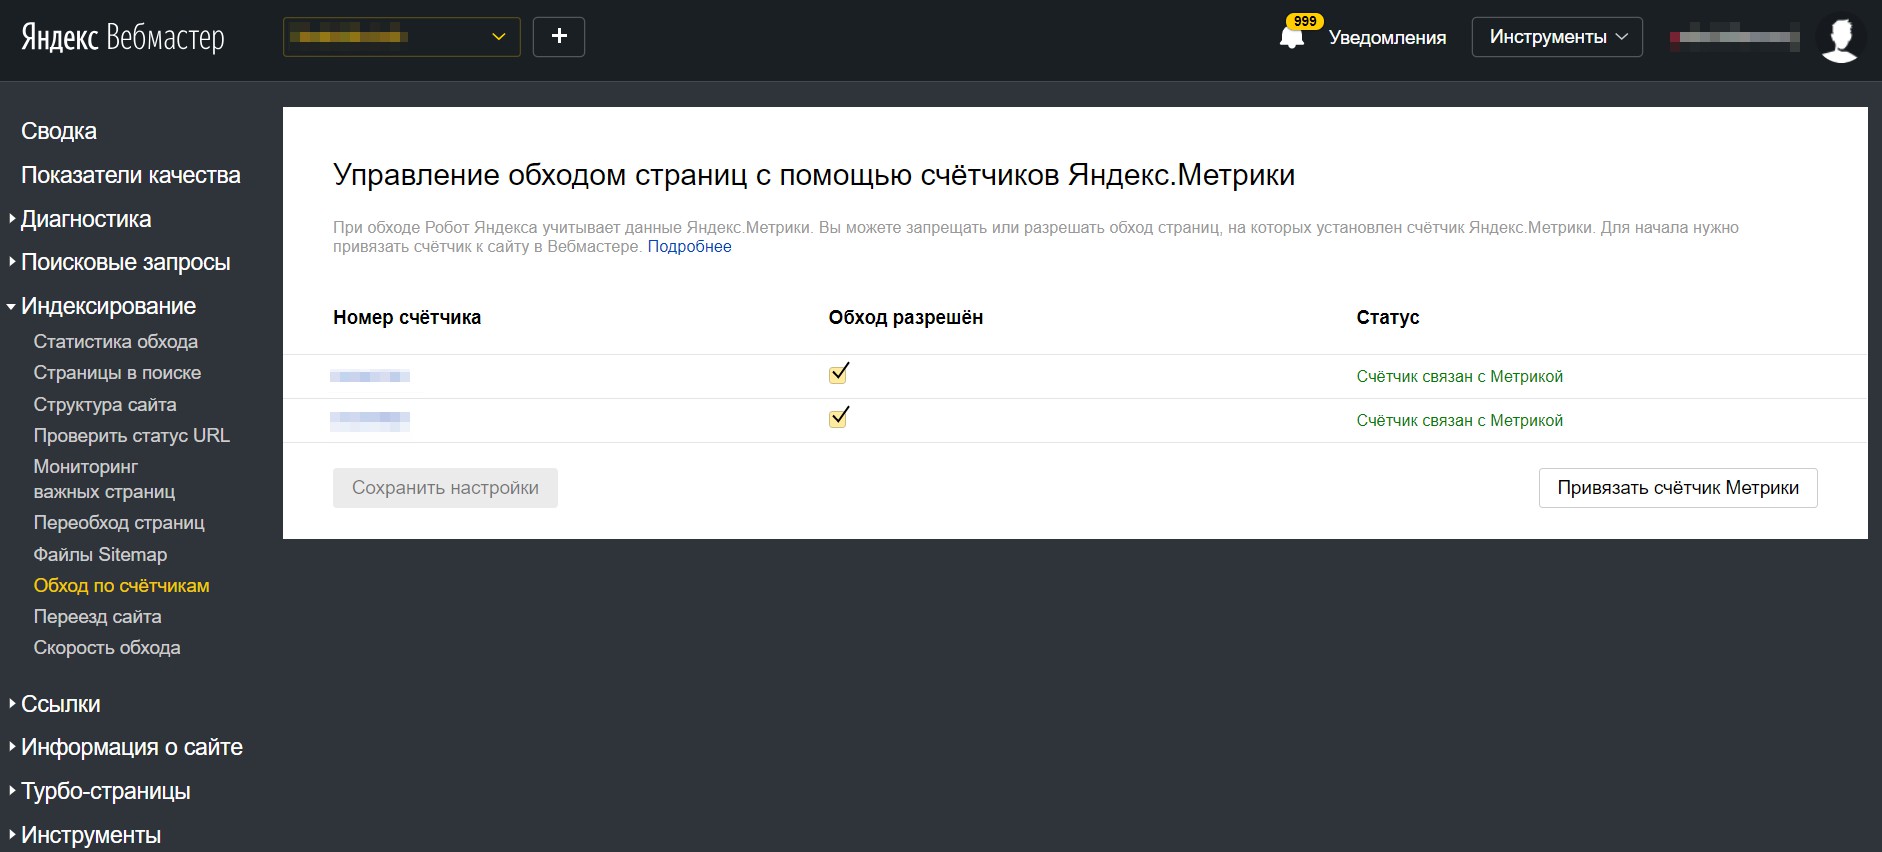 Метрики в Яндекс.Вебмастере